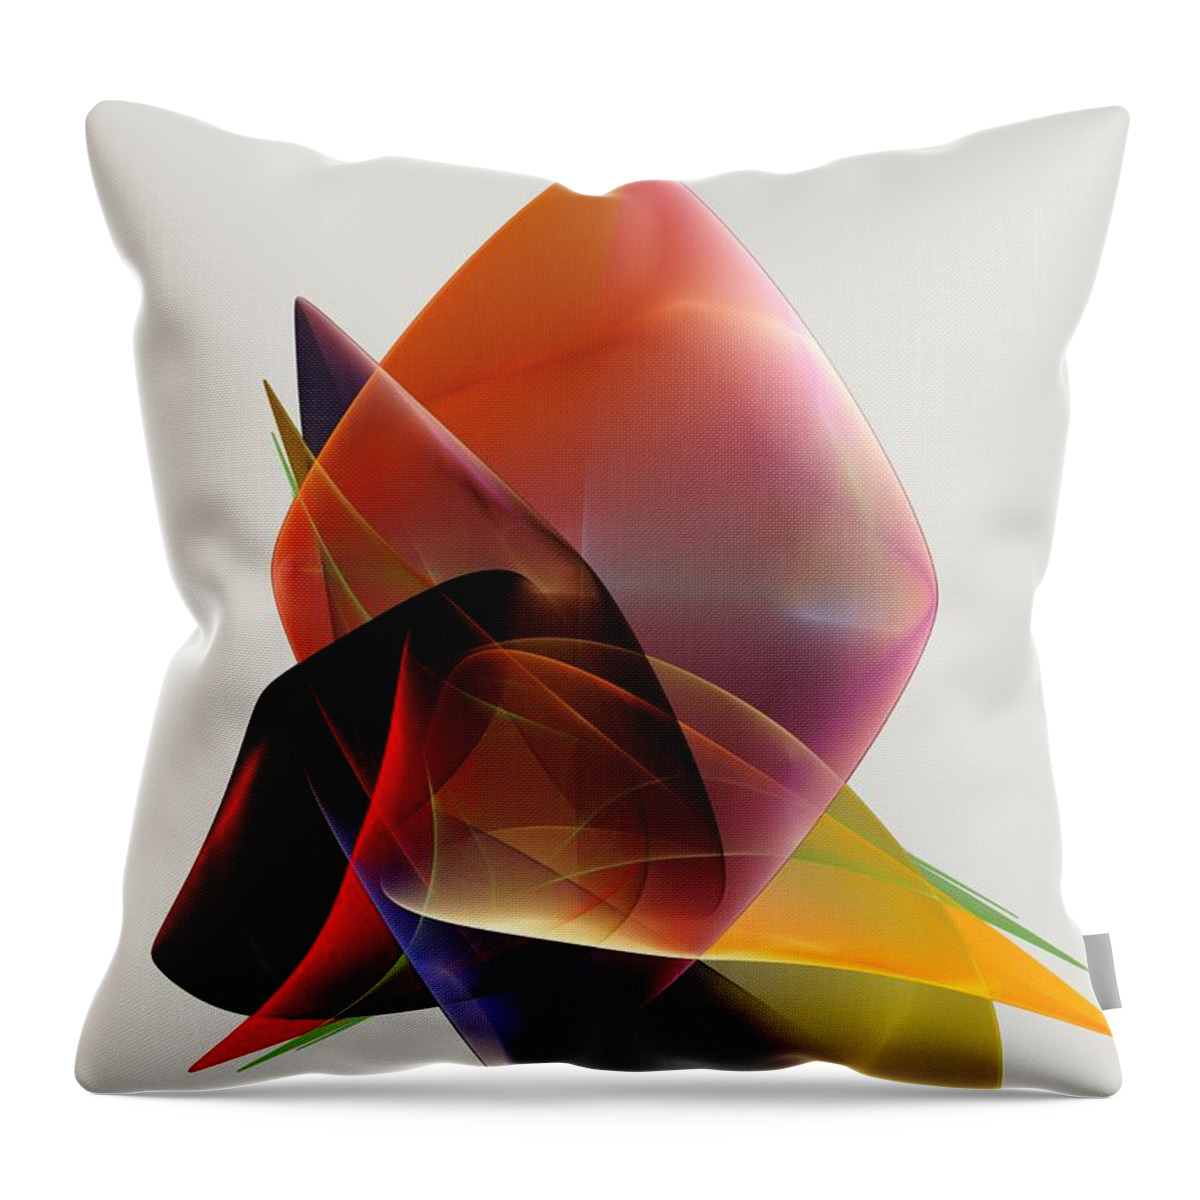 Fine Art Throw Pillow featuring the digital art Still Life Abstract 112013 by David Lane